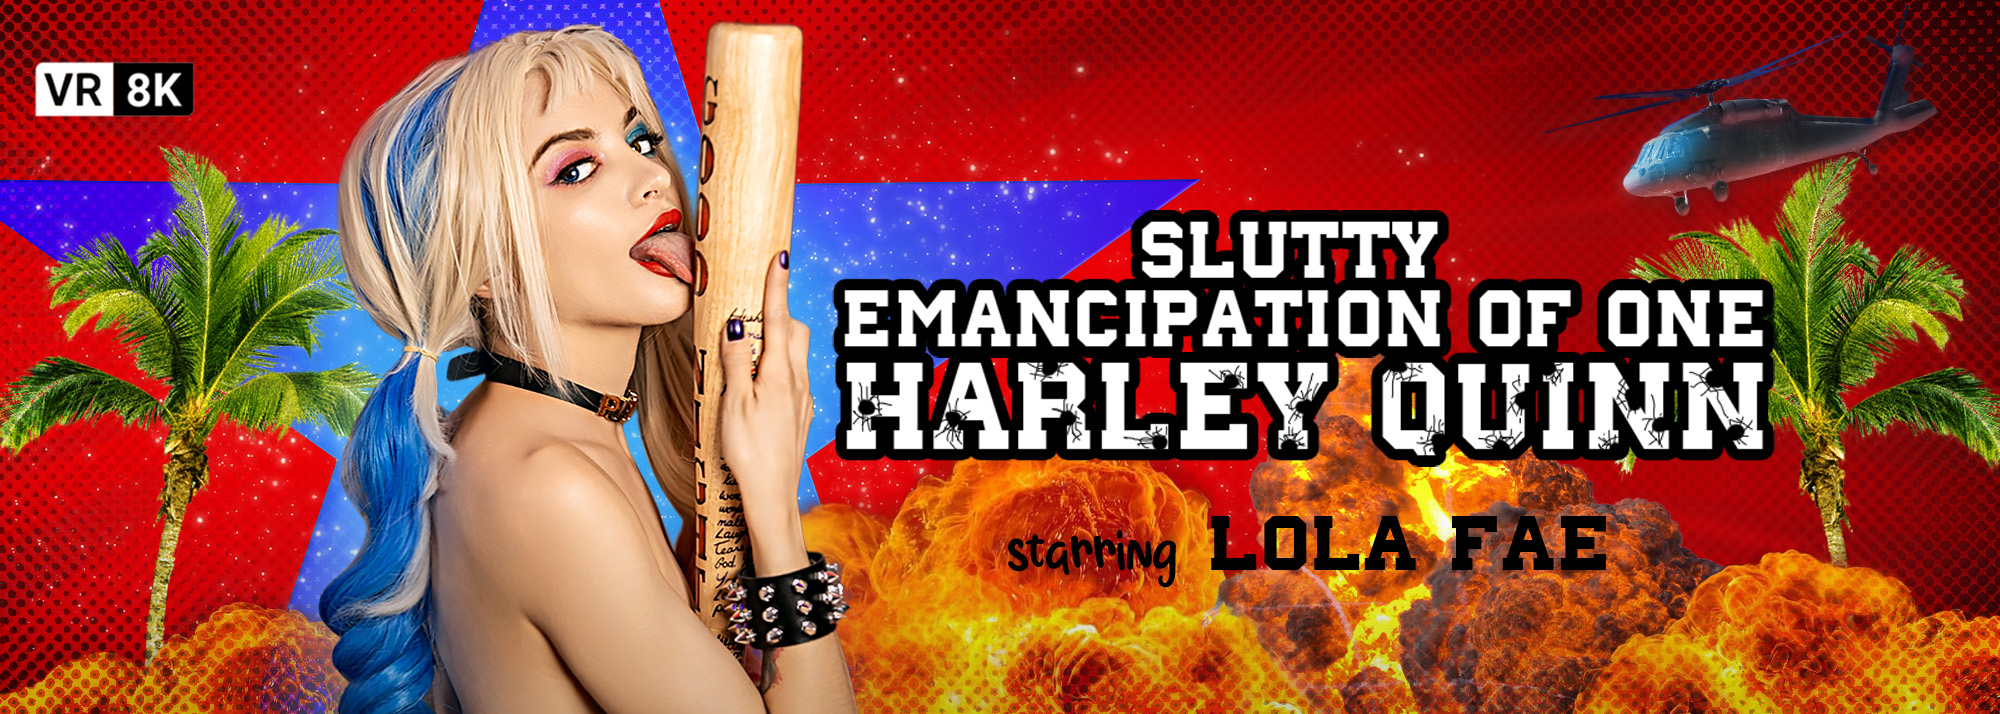 Slutty Emancipation of One Harley Quinn - VR Porn Video, Starring Lola Fae VR